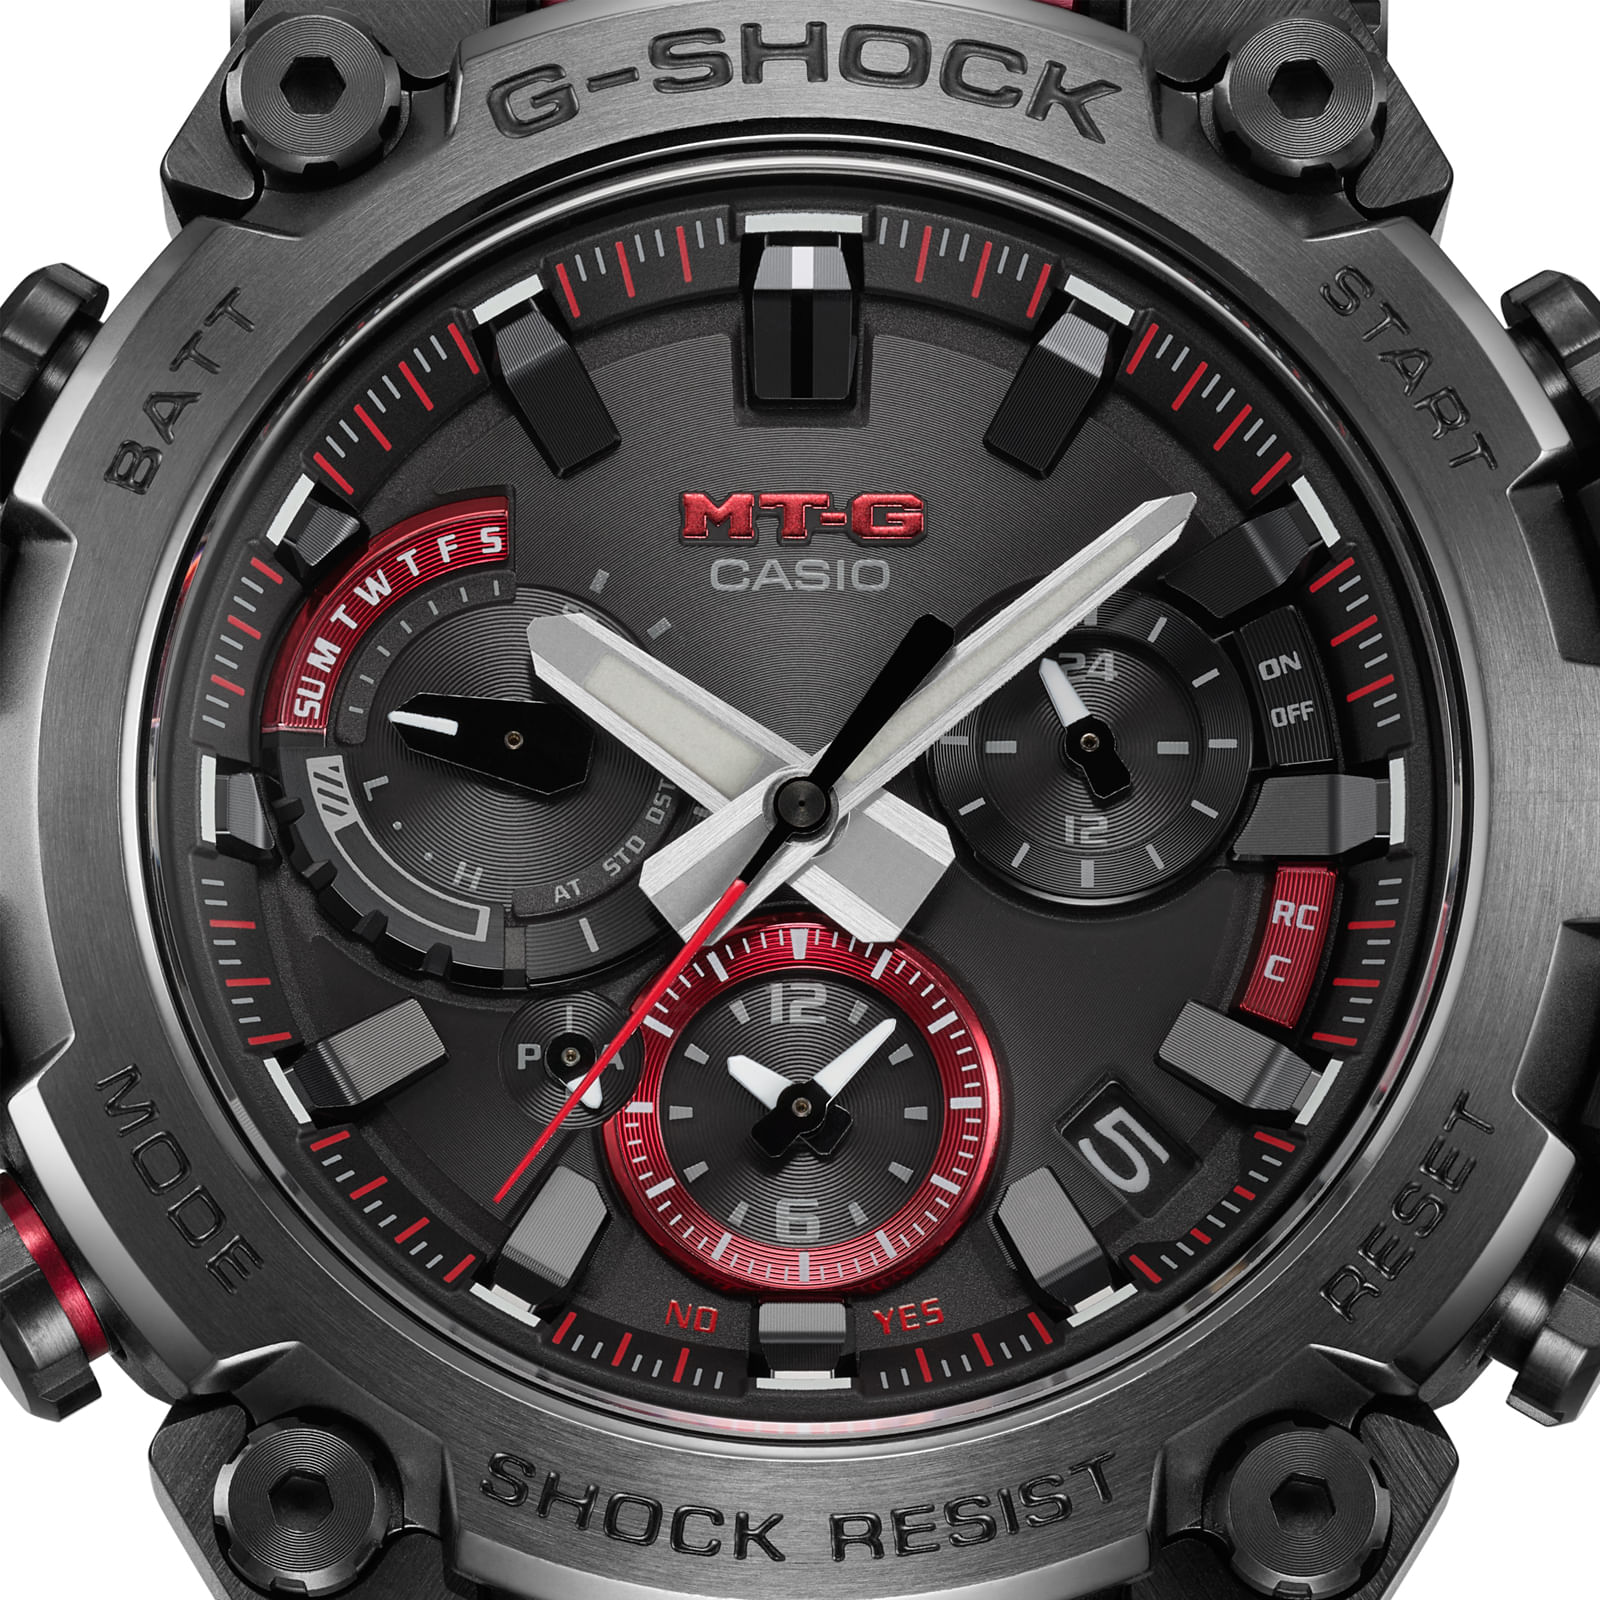 Reloj G-SHOCK MTG-B3000BD-1A Resina/Acero Hombre Negro